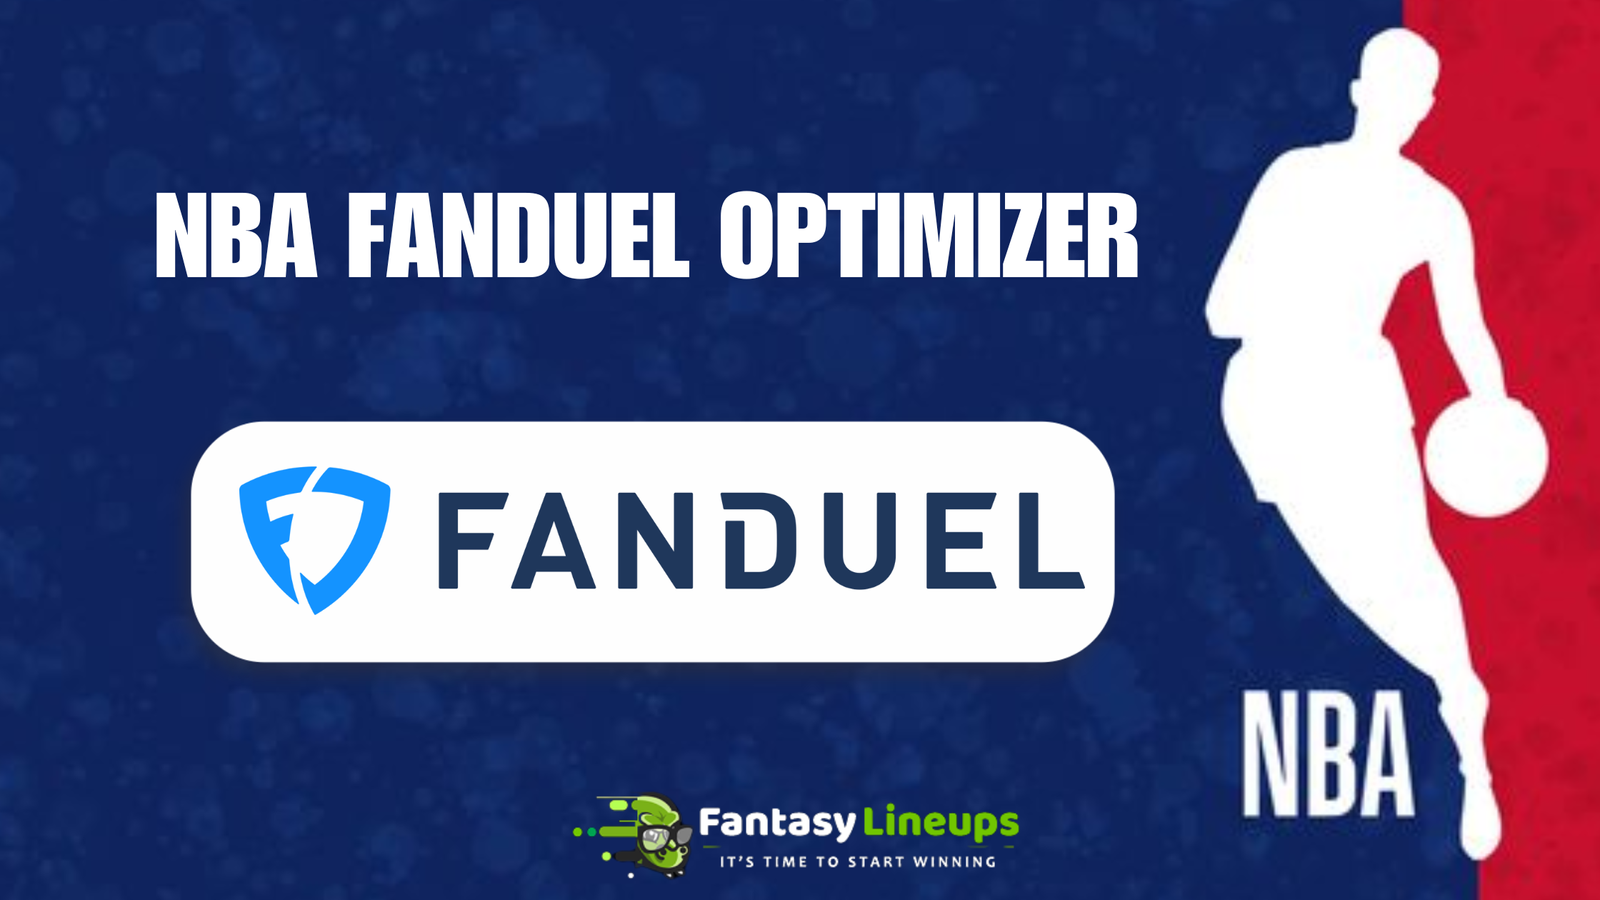 Maximize Your NBA Fantasy League Success with the Ultimate NBA FanDuel Optimizer Guide